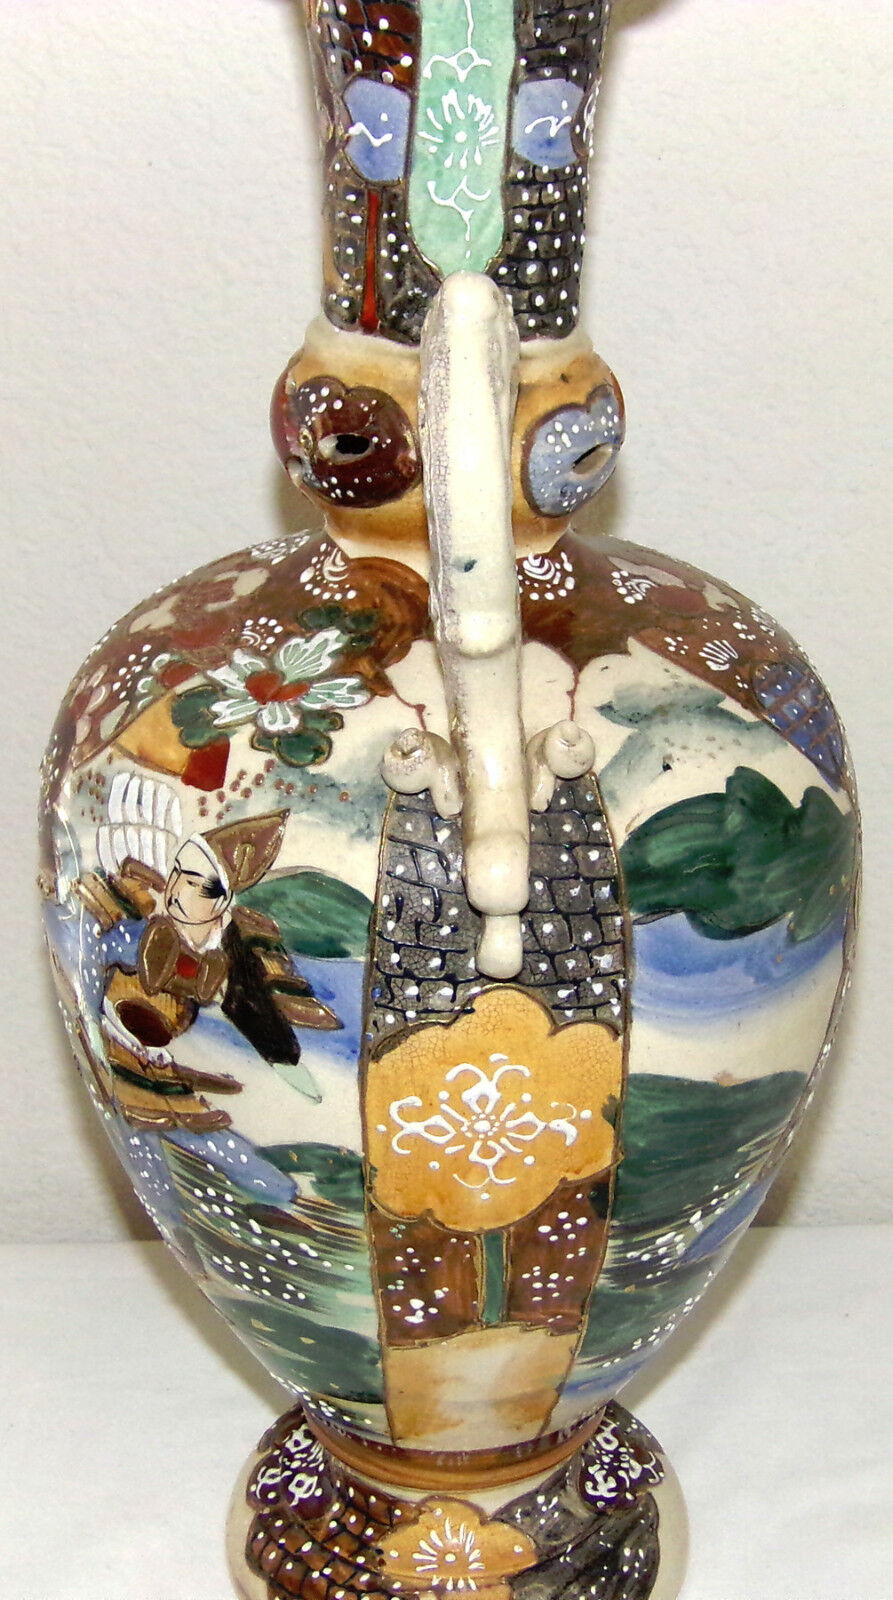 Antique Japanese Satsuma Samurai Warrior Urn Vase c.1910 Meiji Period Urn Vase